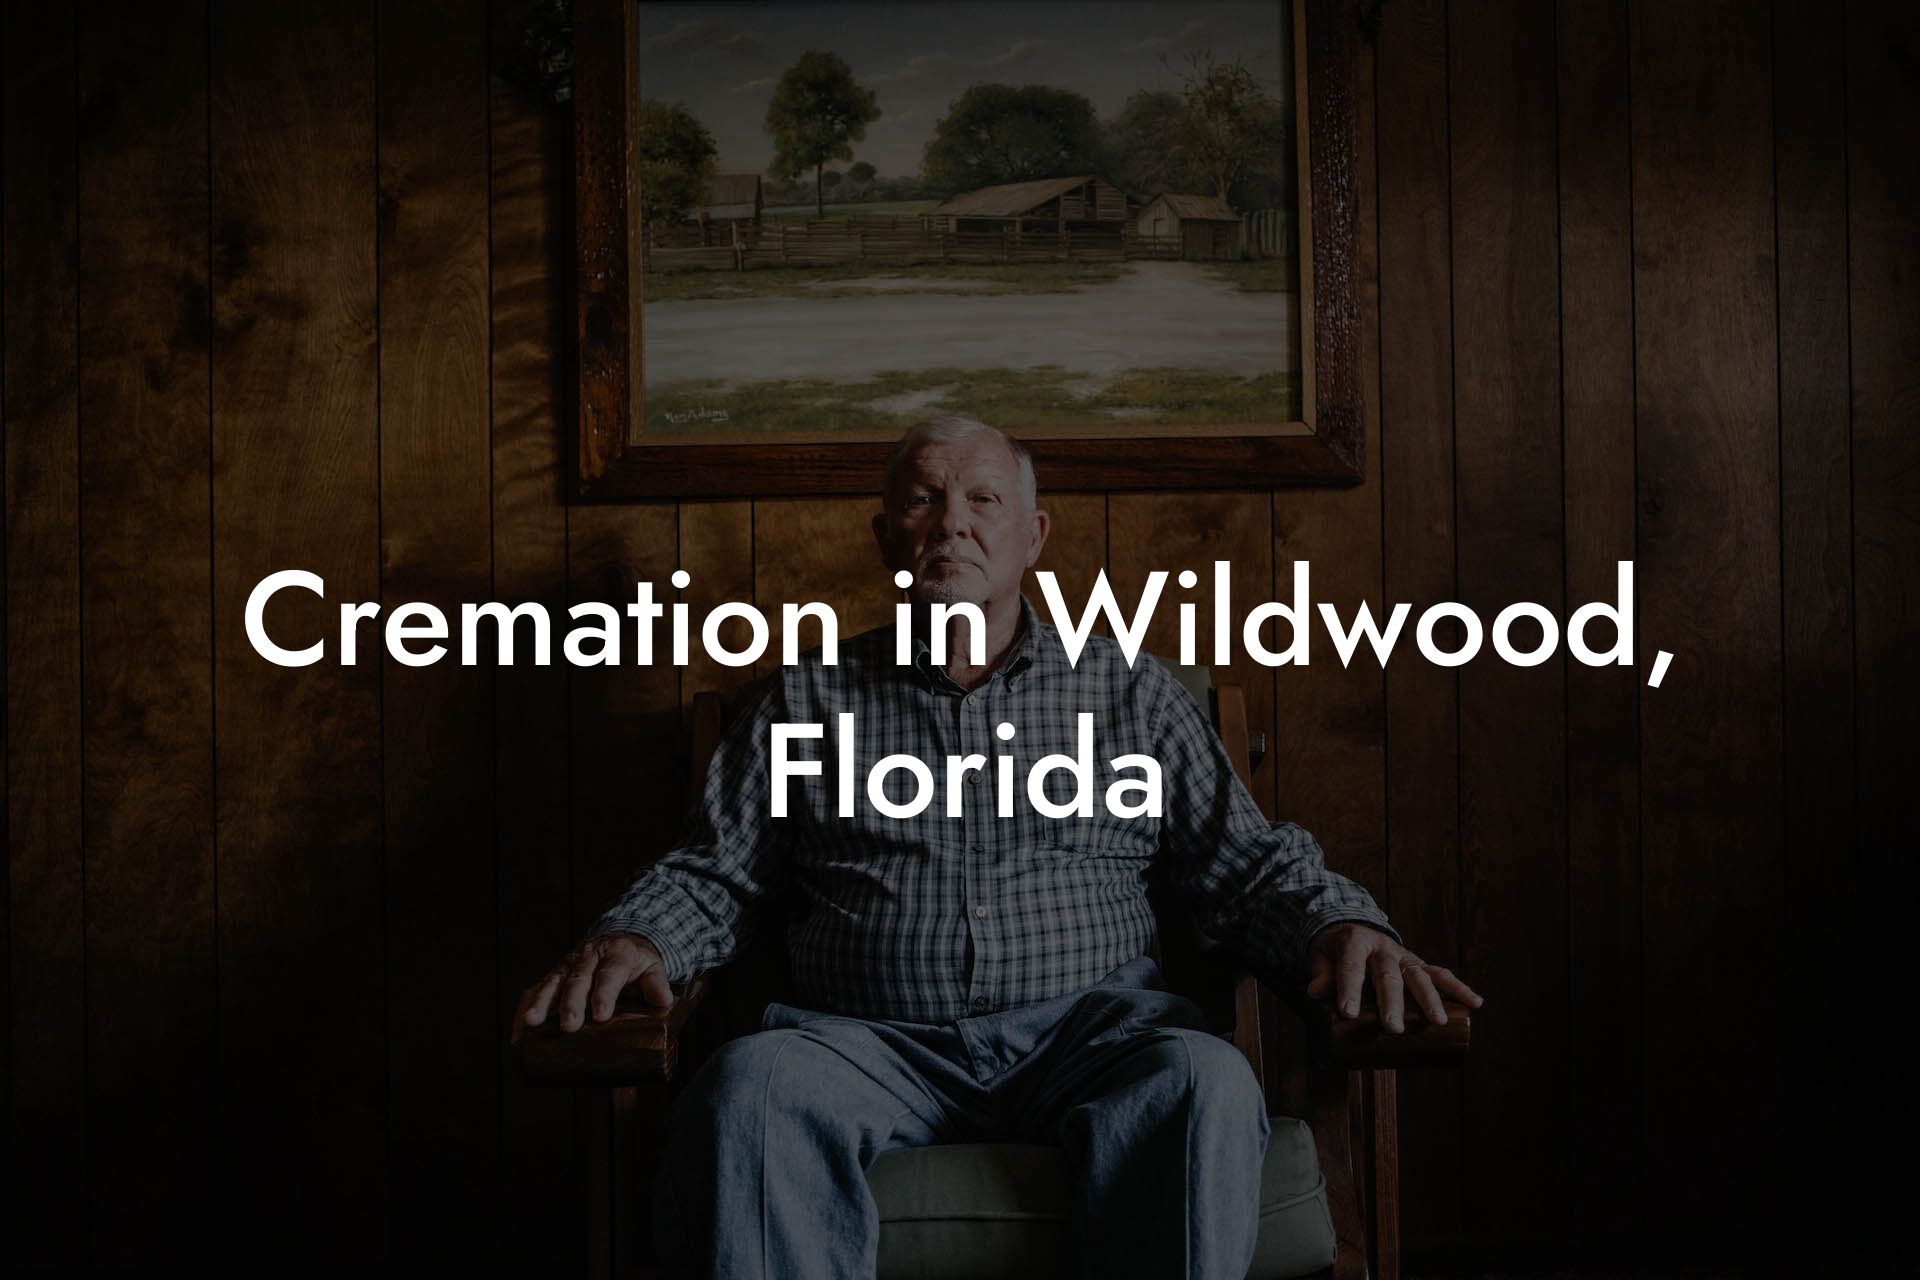 Cremation in Wildwood, Florida